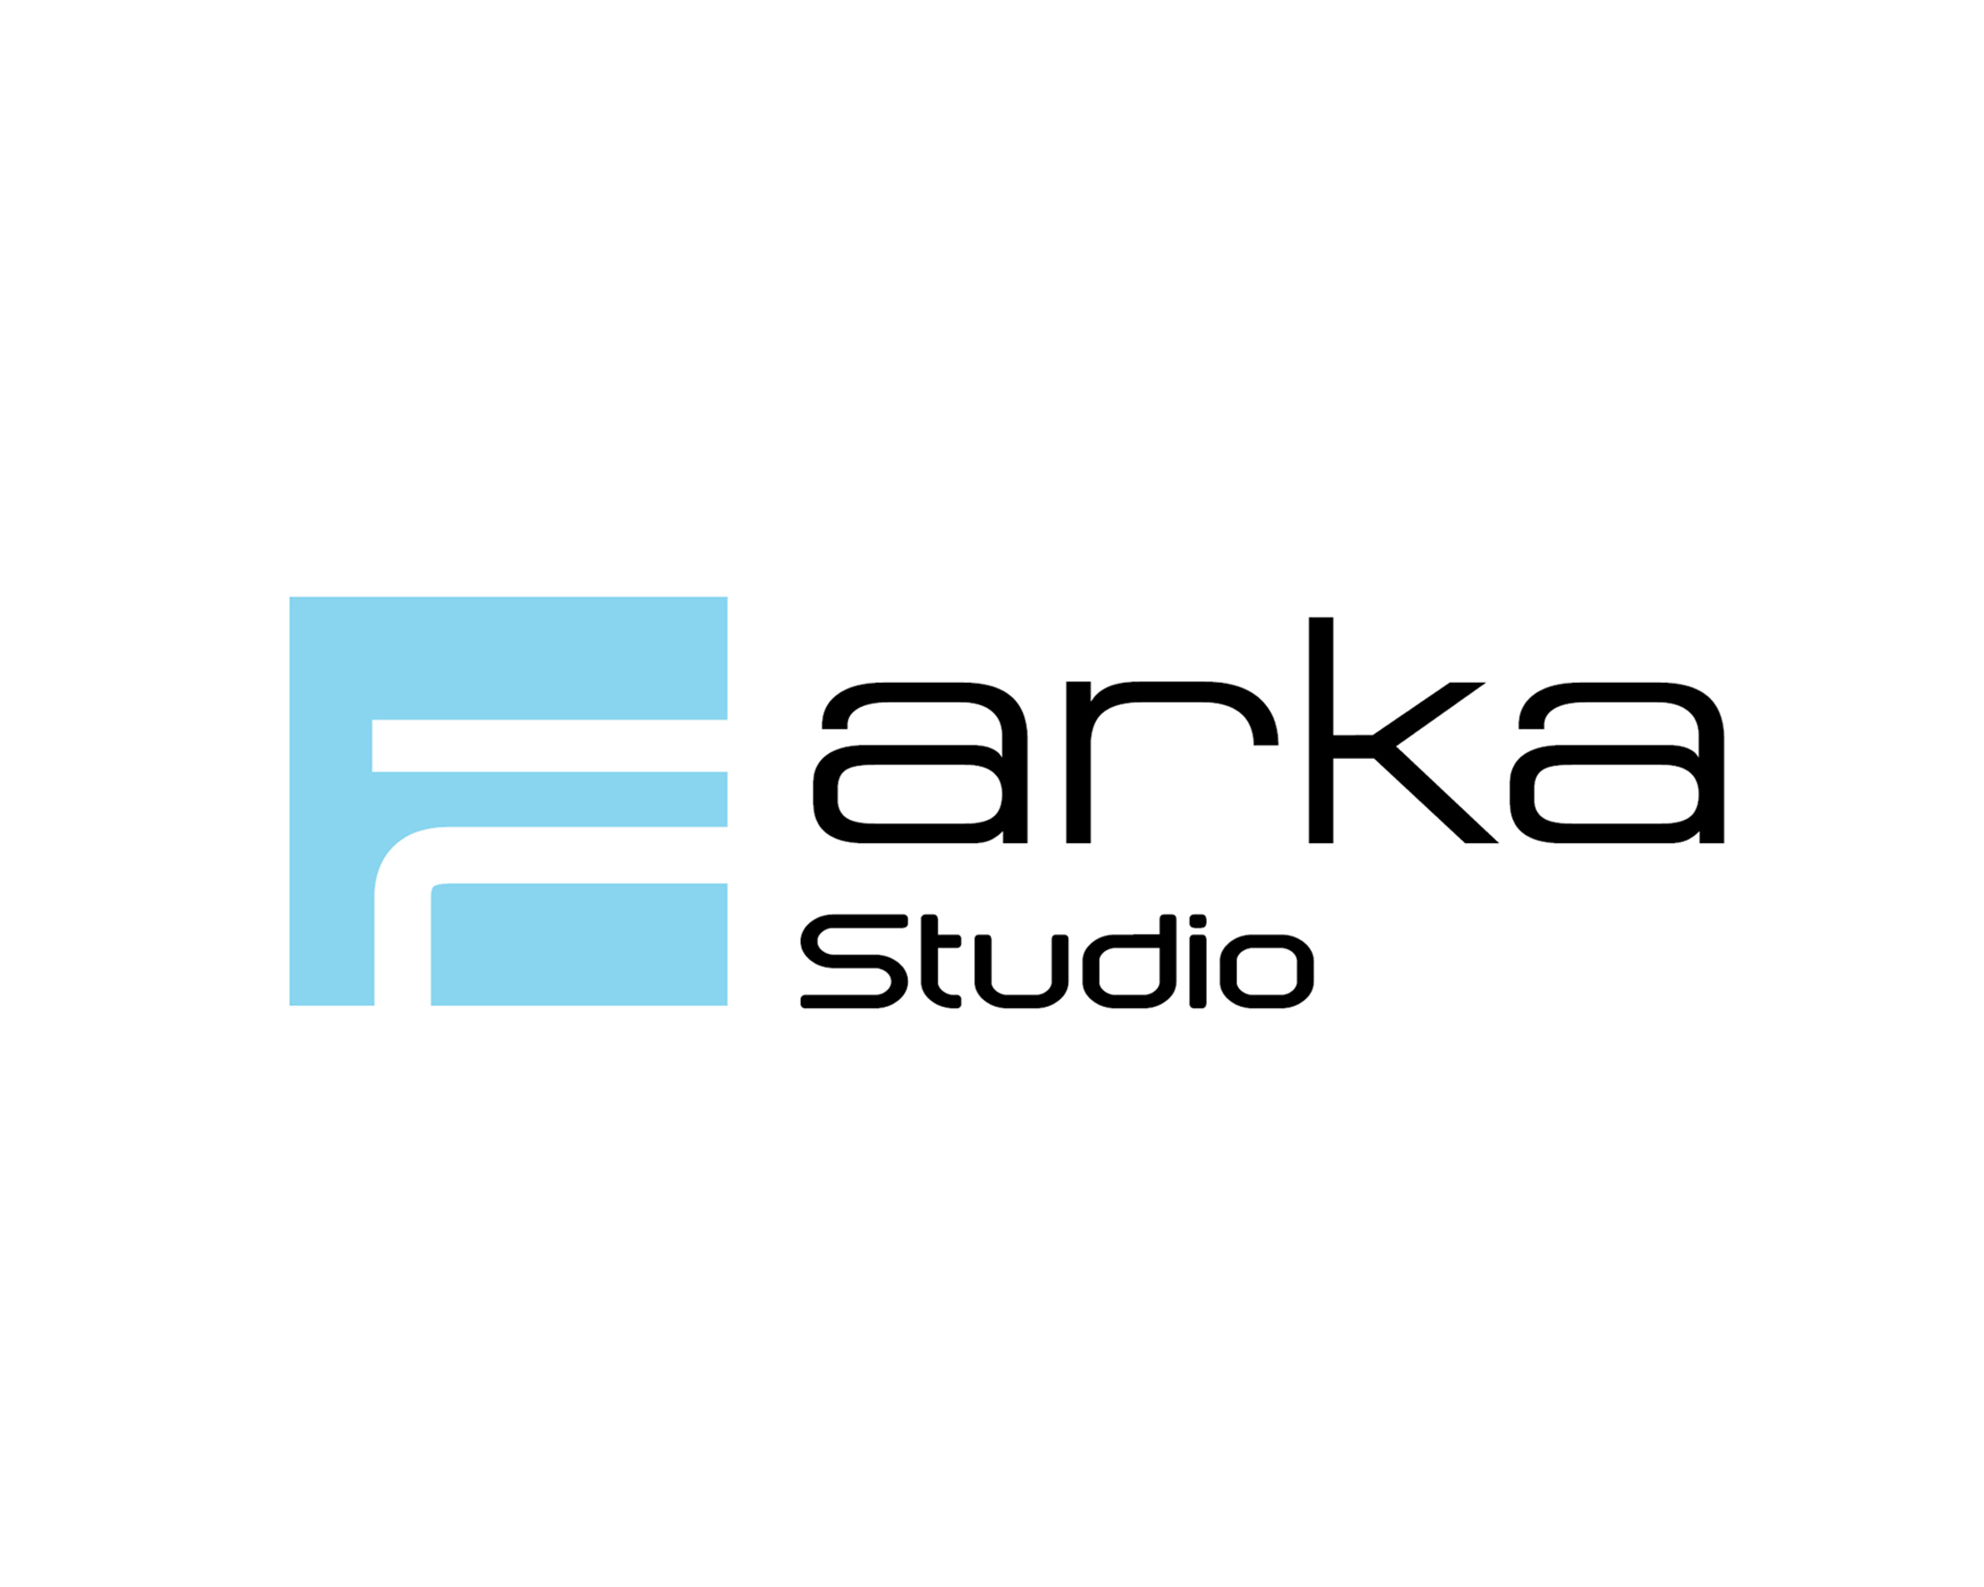 Arka Studio